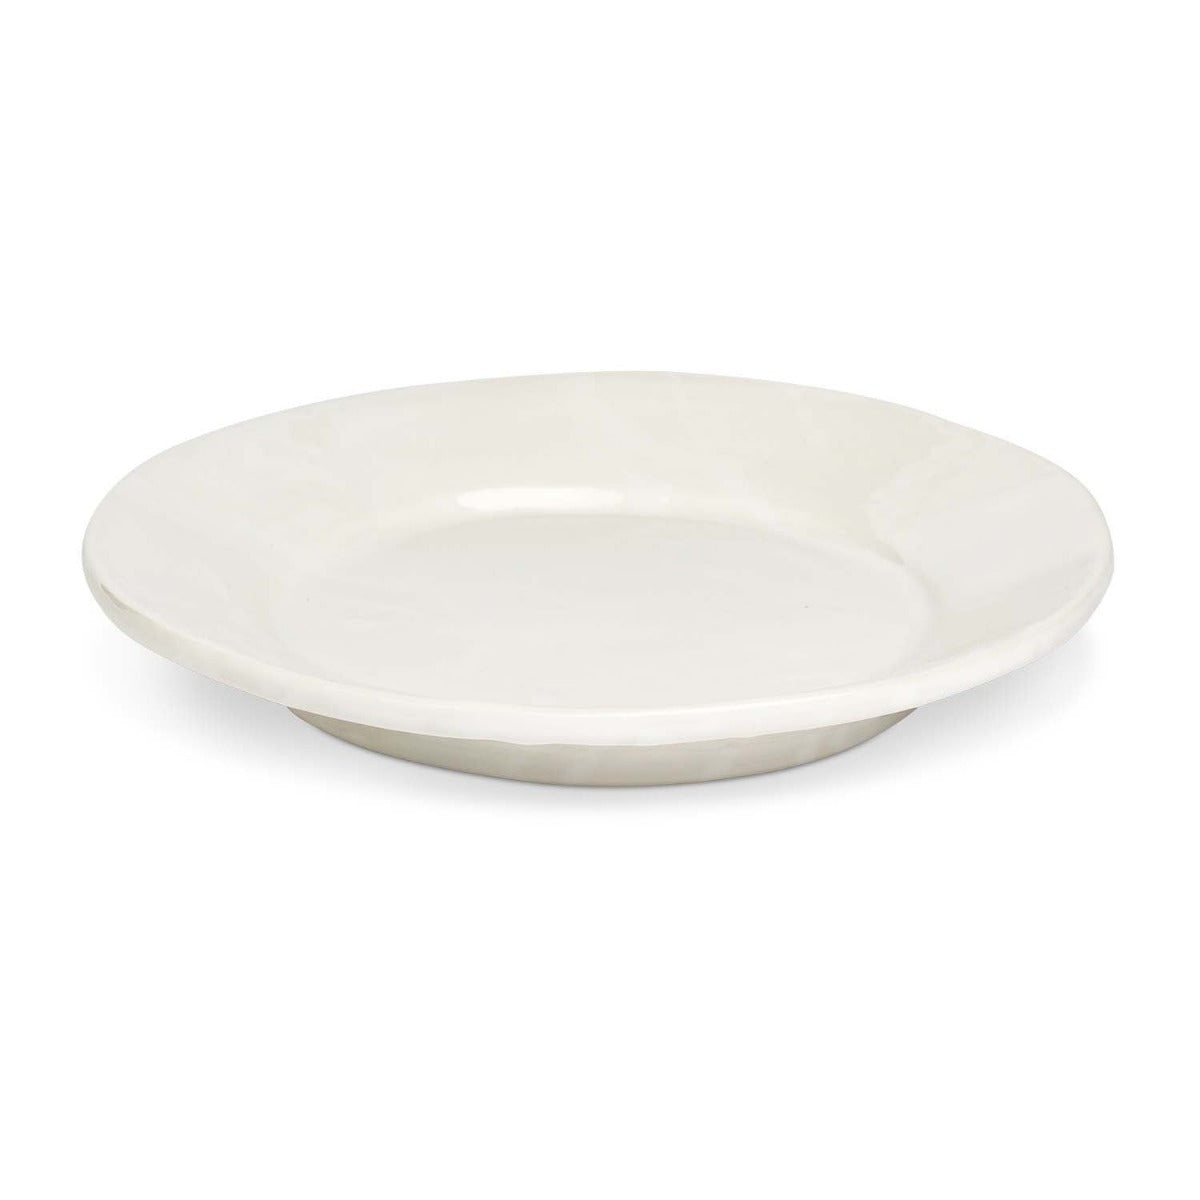 Medium White Plate